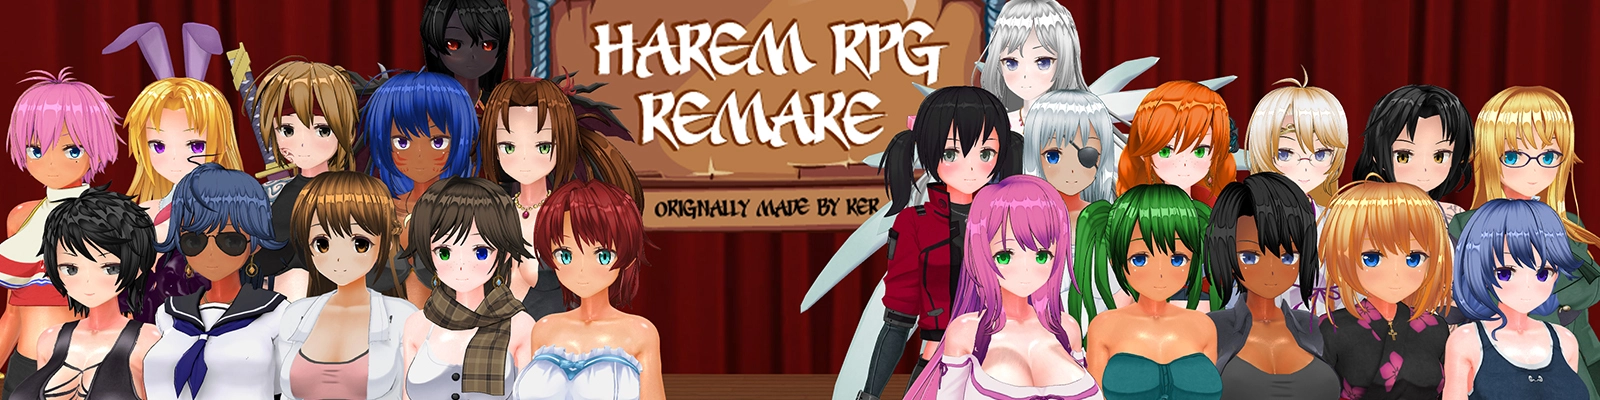 Harem RPG Unofficial Remake main image